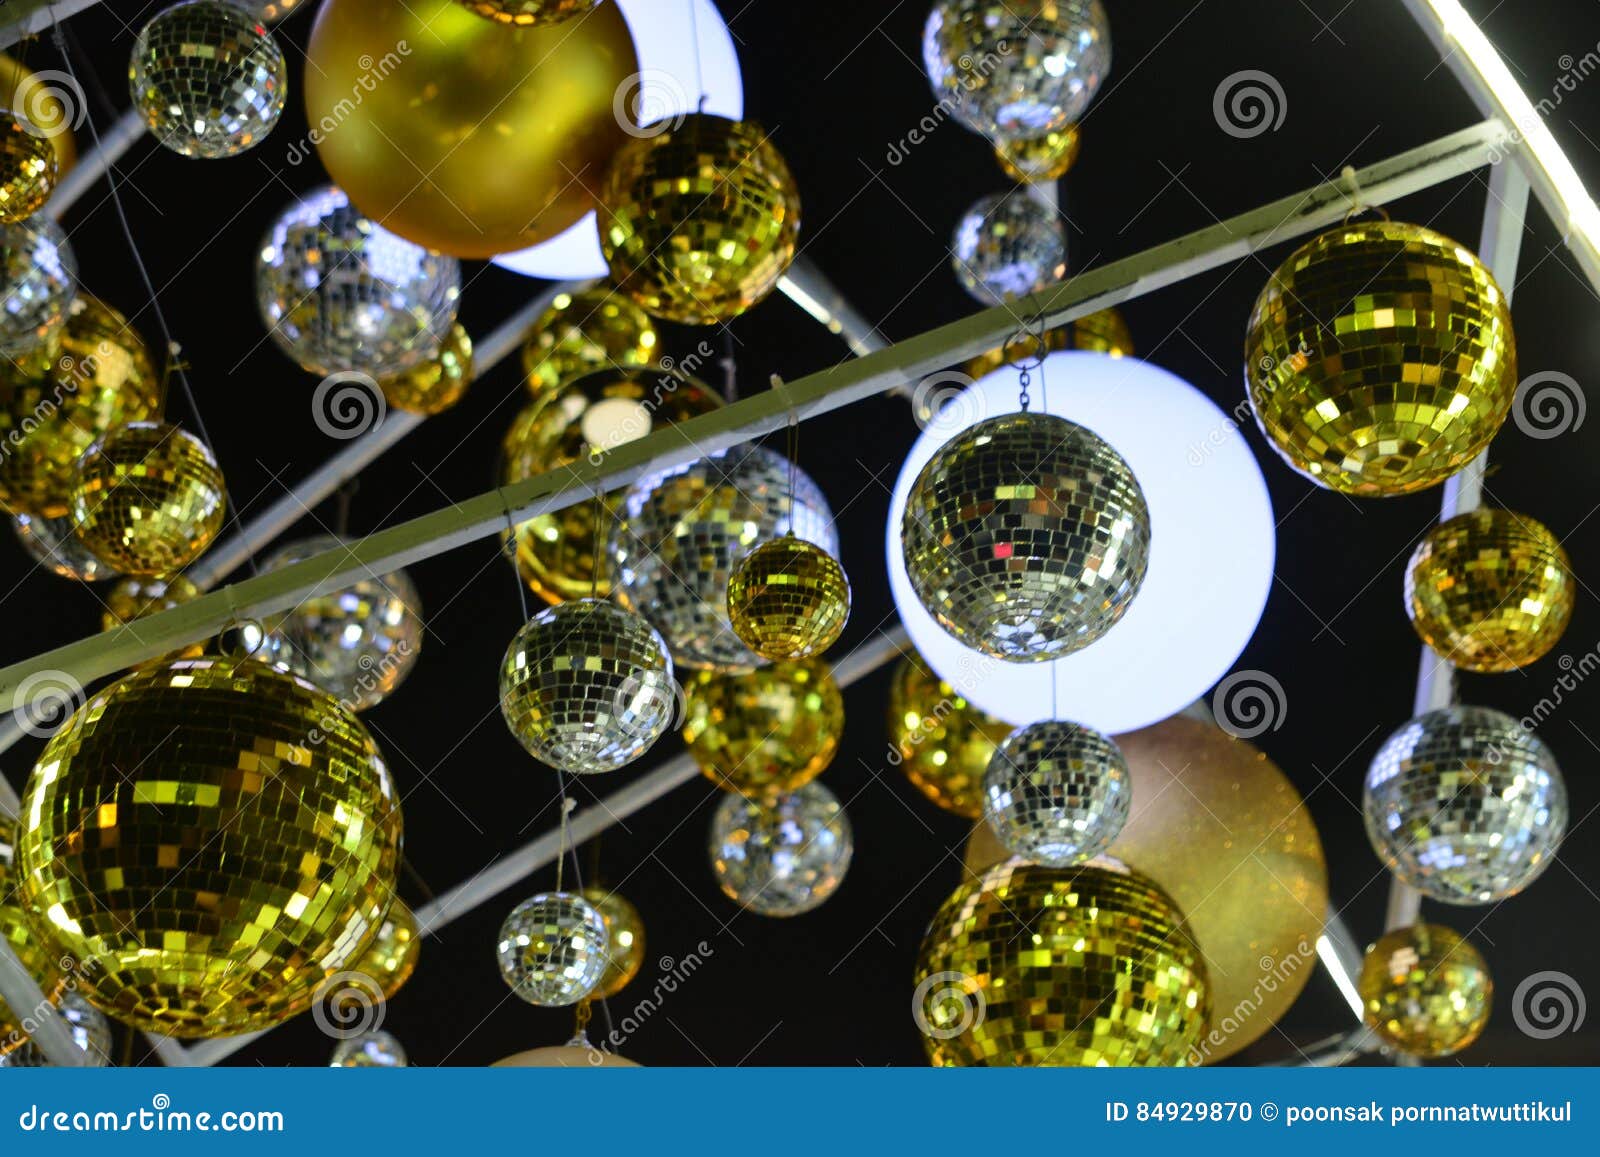 Christmas ornaments stock photo. Image of holiday, decoration - 84929870